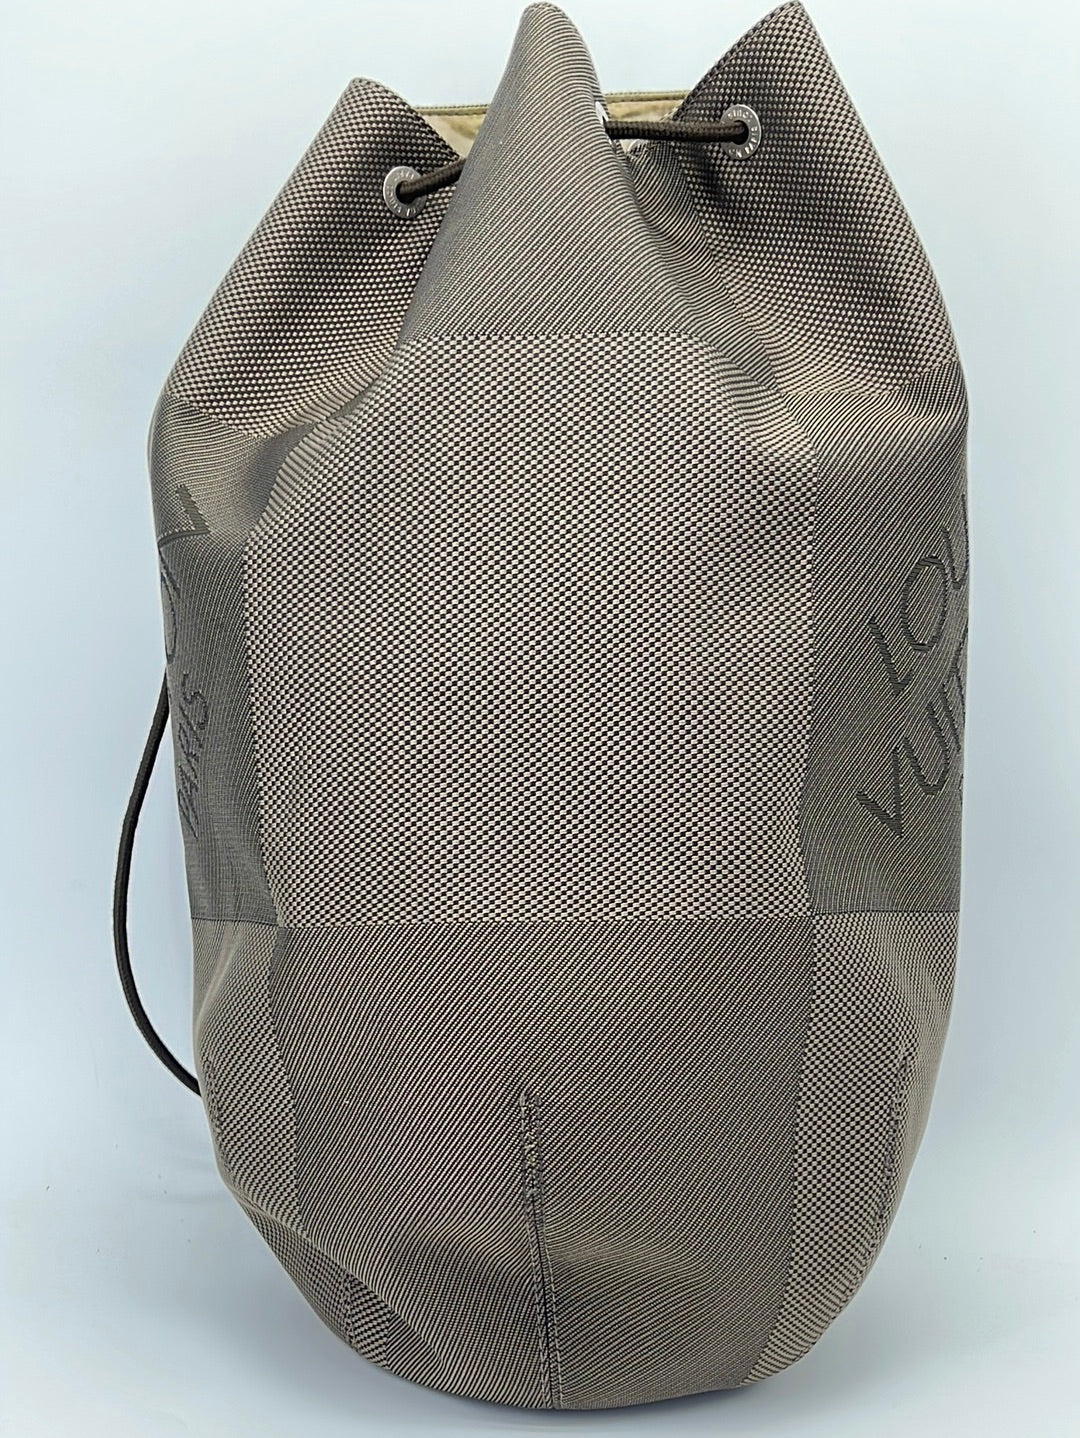 lv drawstring backpack